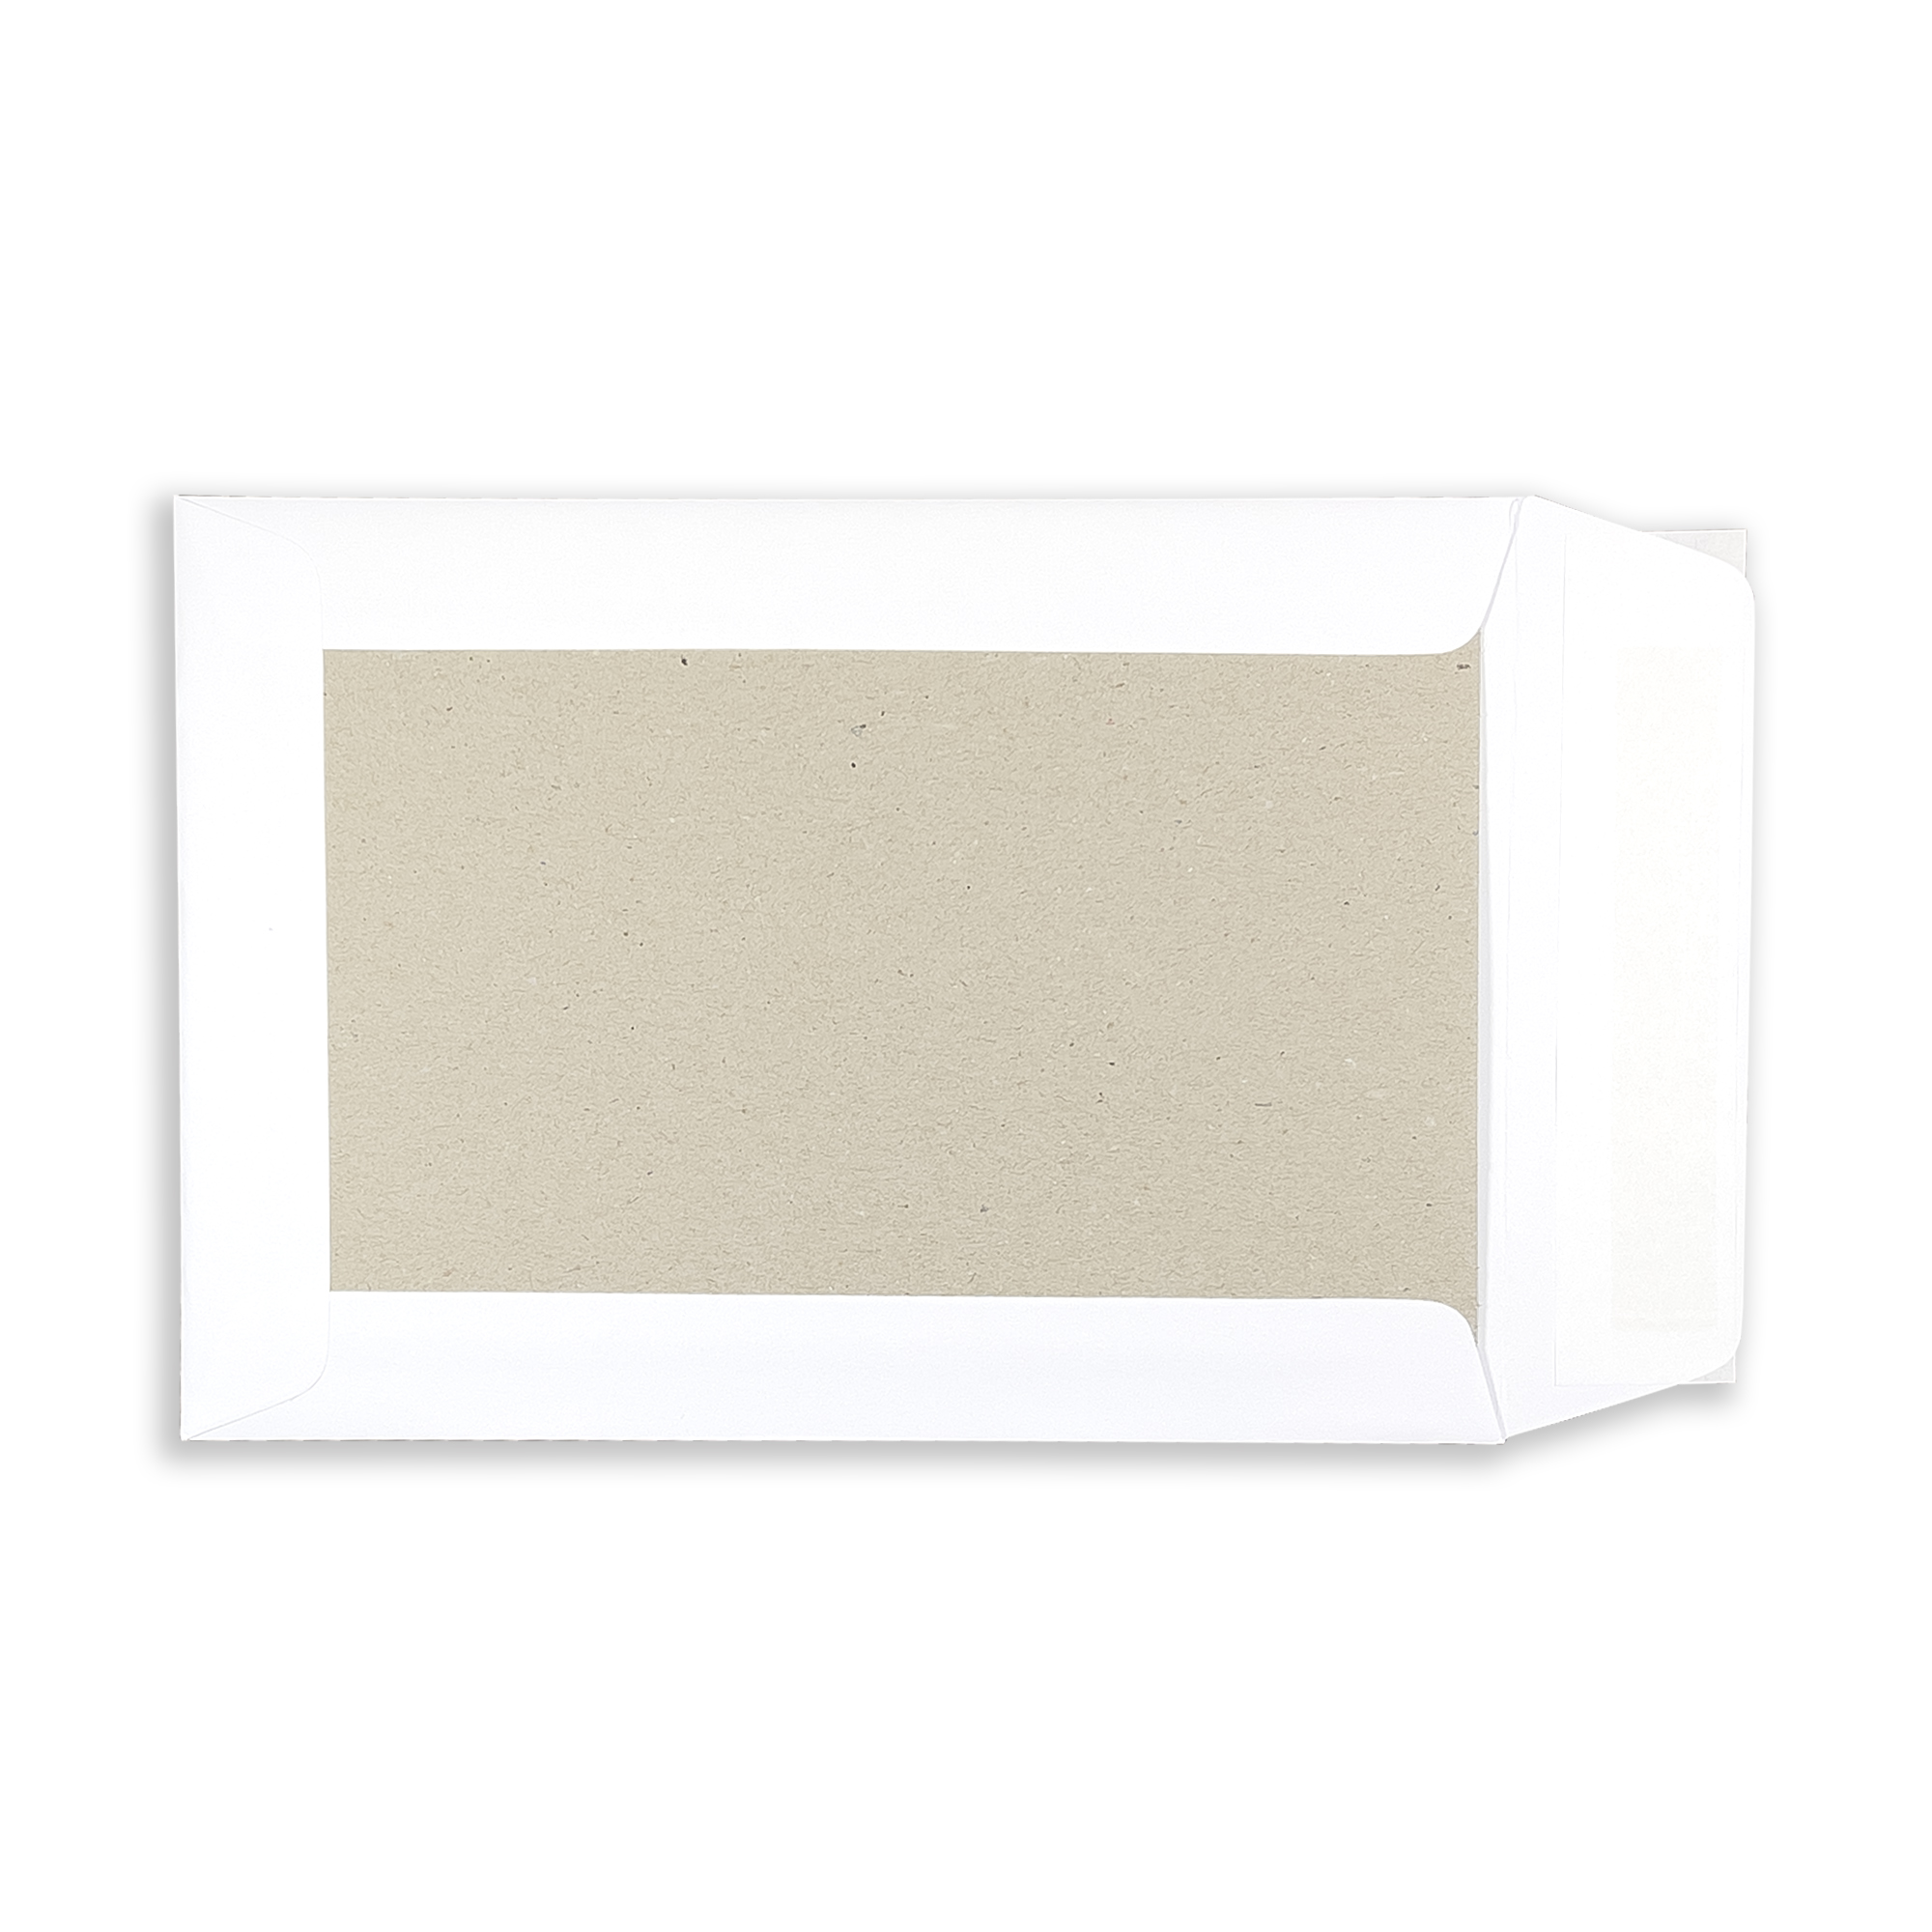 rectangle-white-board-back-envelopes-back-open